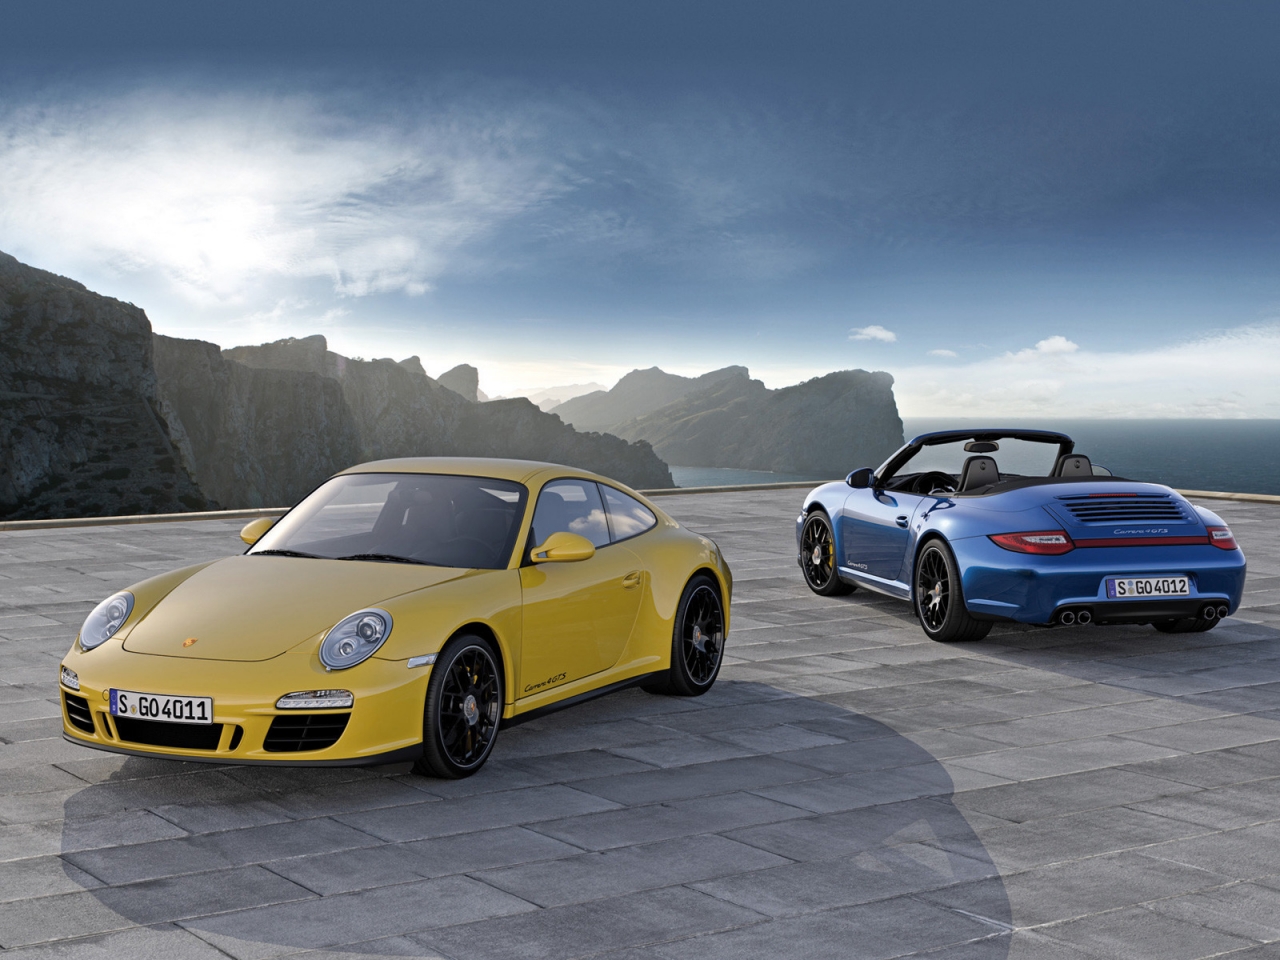 Porsche 911 Carrera 4 GTS Duo for 1280 x 960 resolution